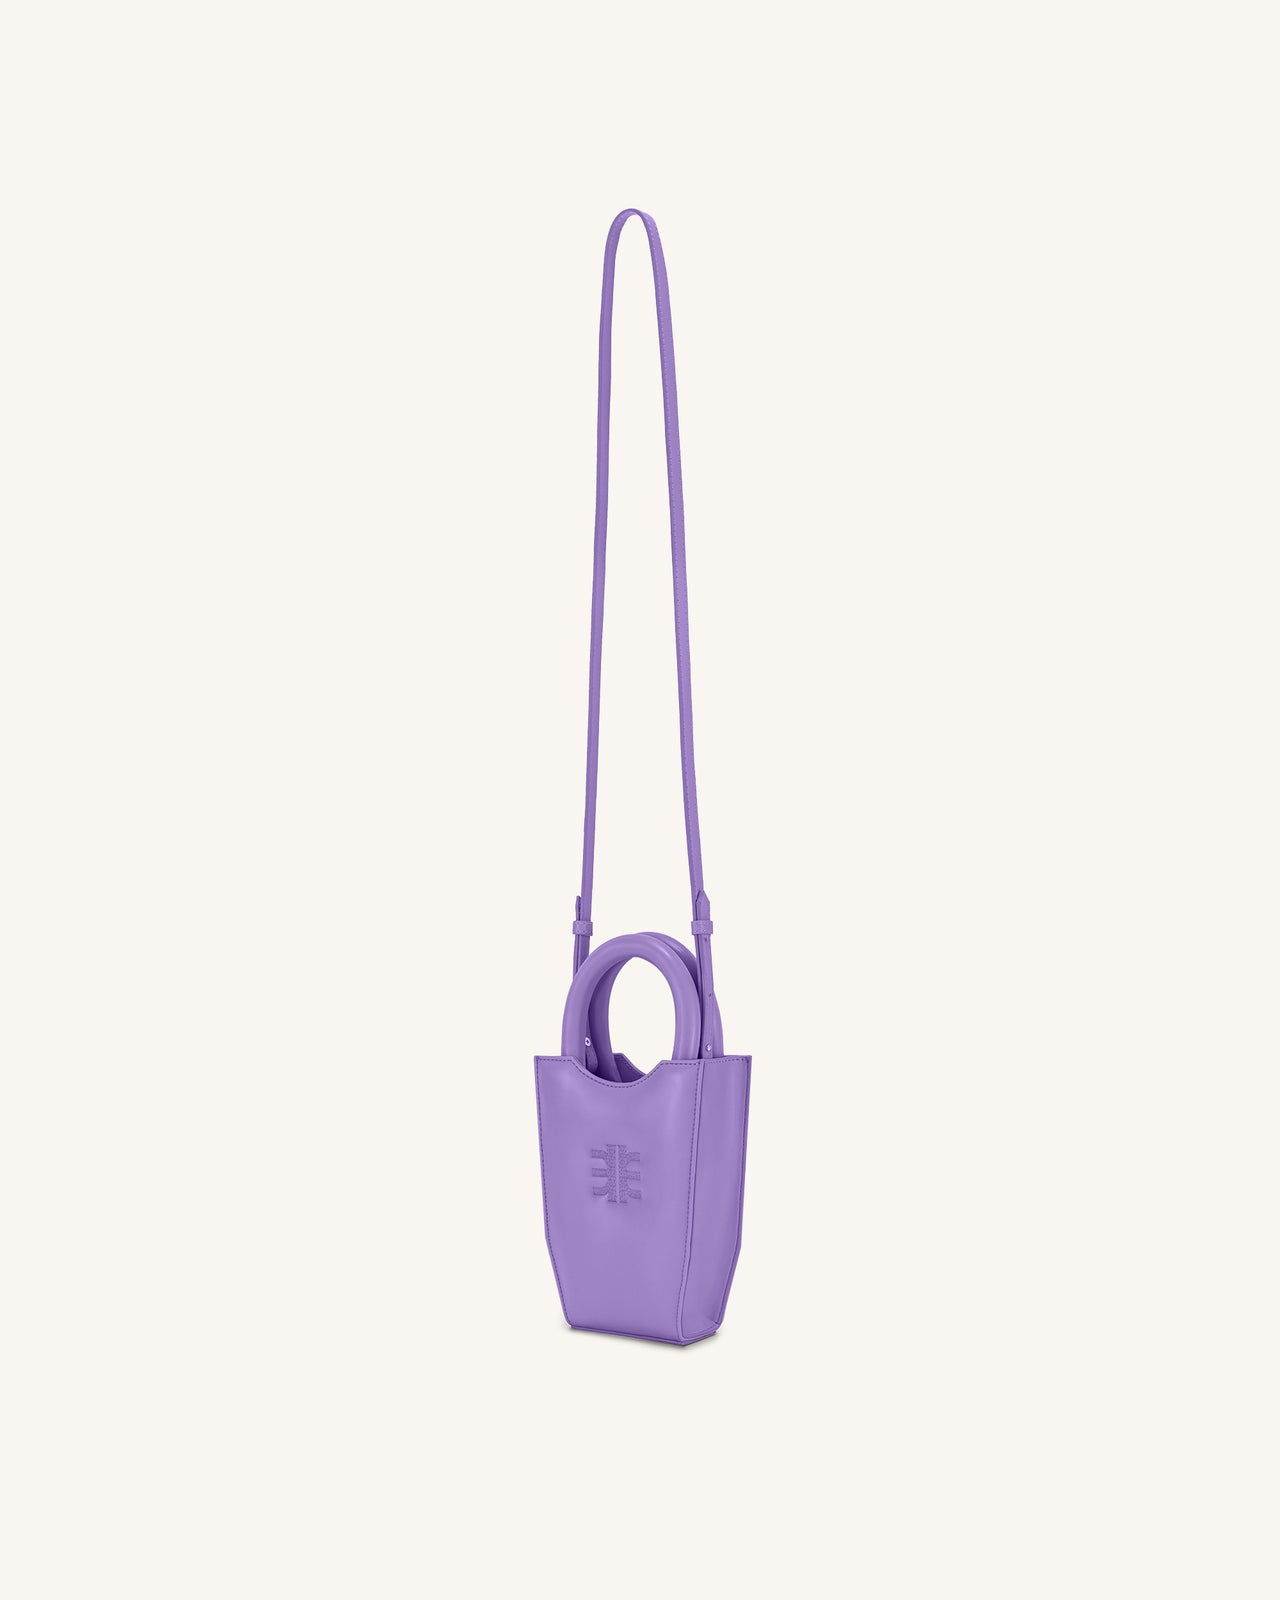 FEI Soft Volume Phone Bag - Purple